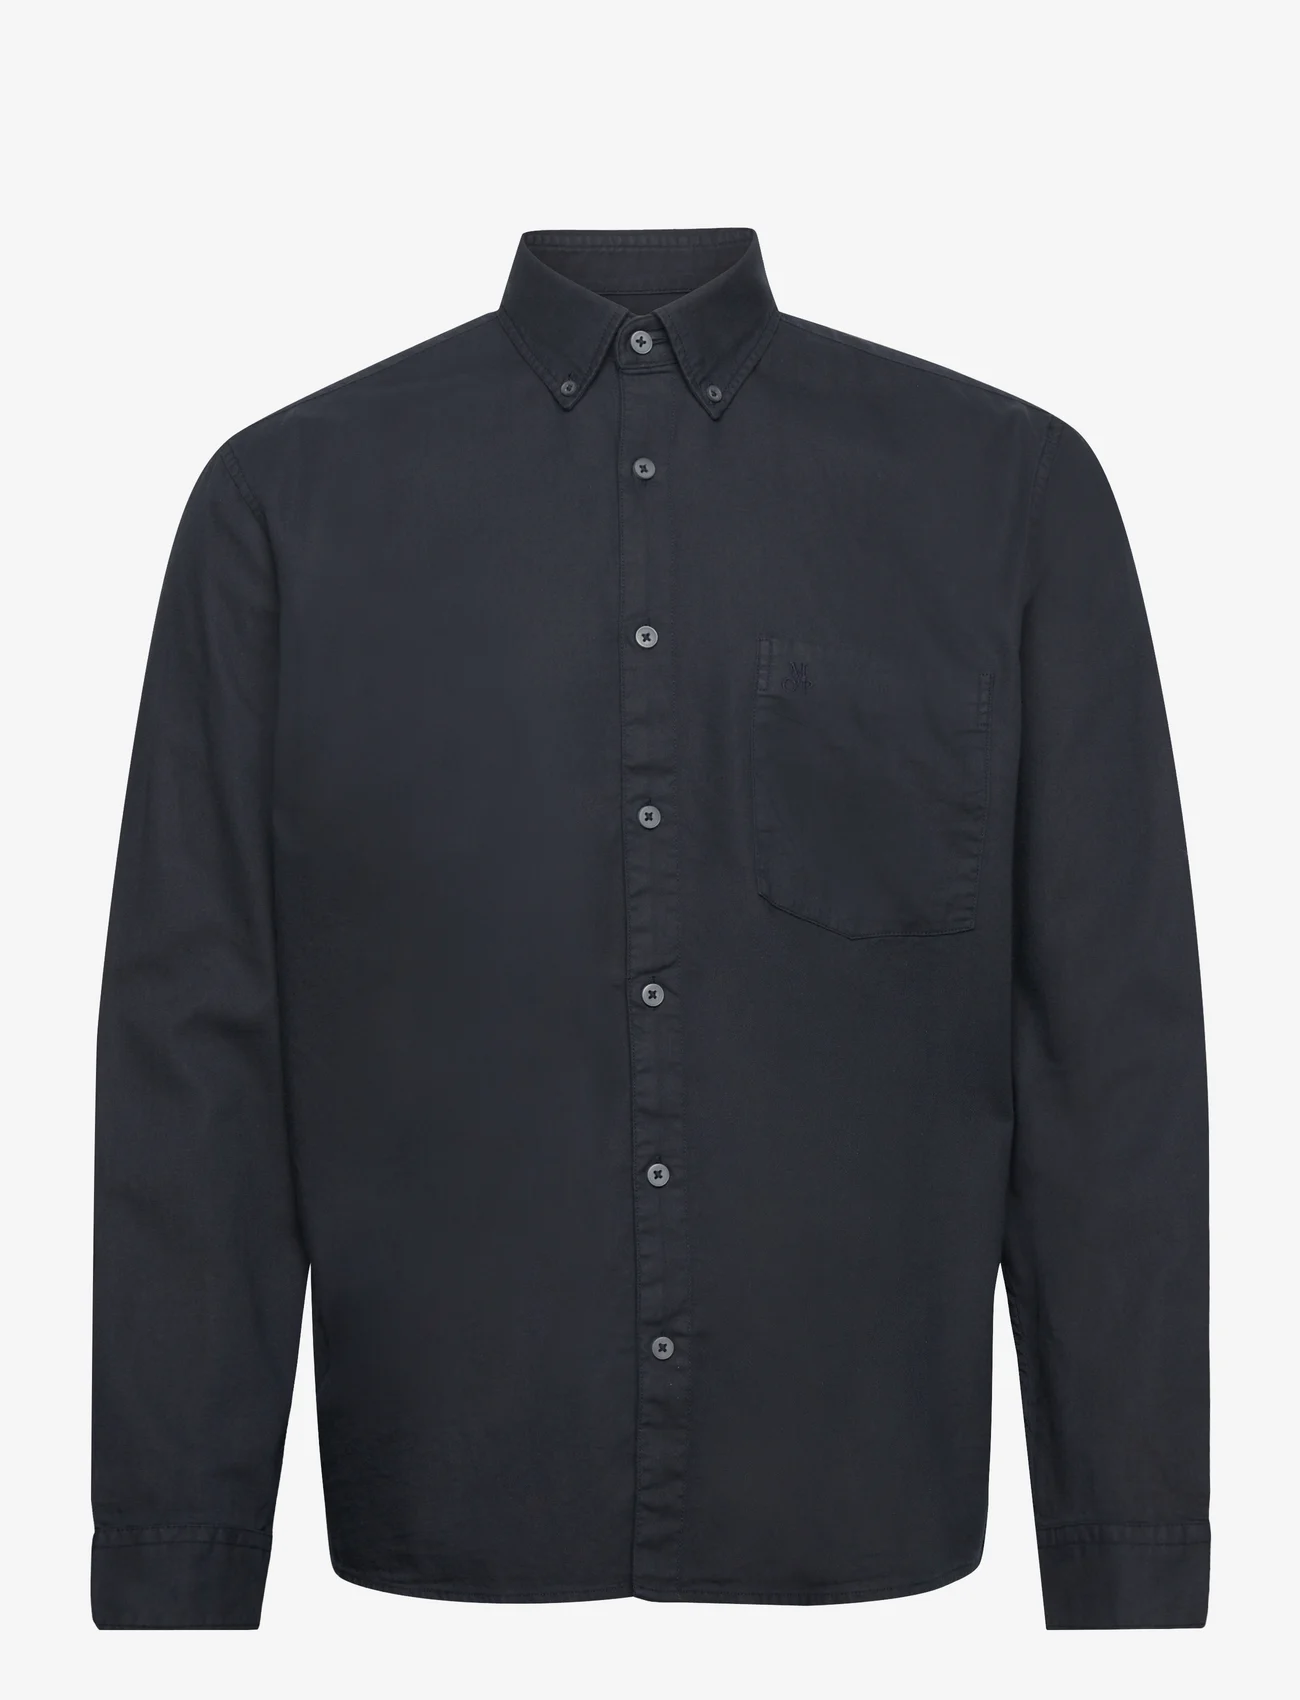 Marc O'Polo - SHIRTS/BLOUSES LONG SLEEVE - basic skjorter - dark navy - 0